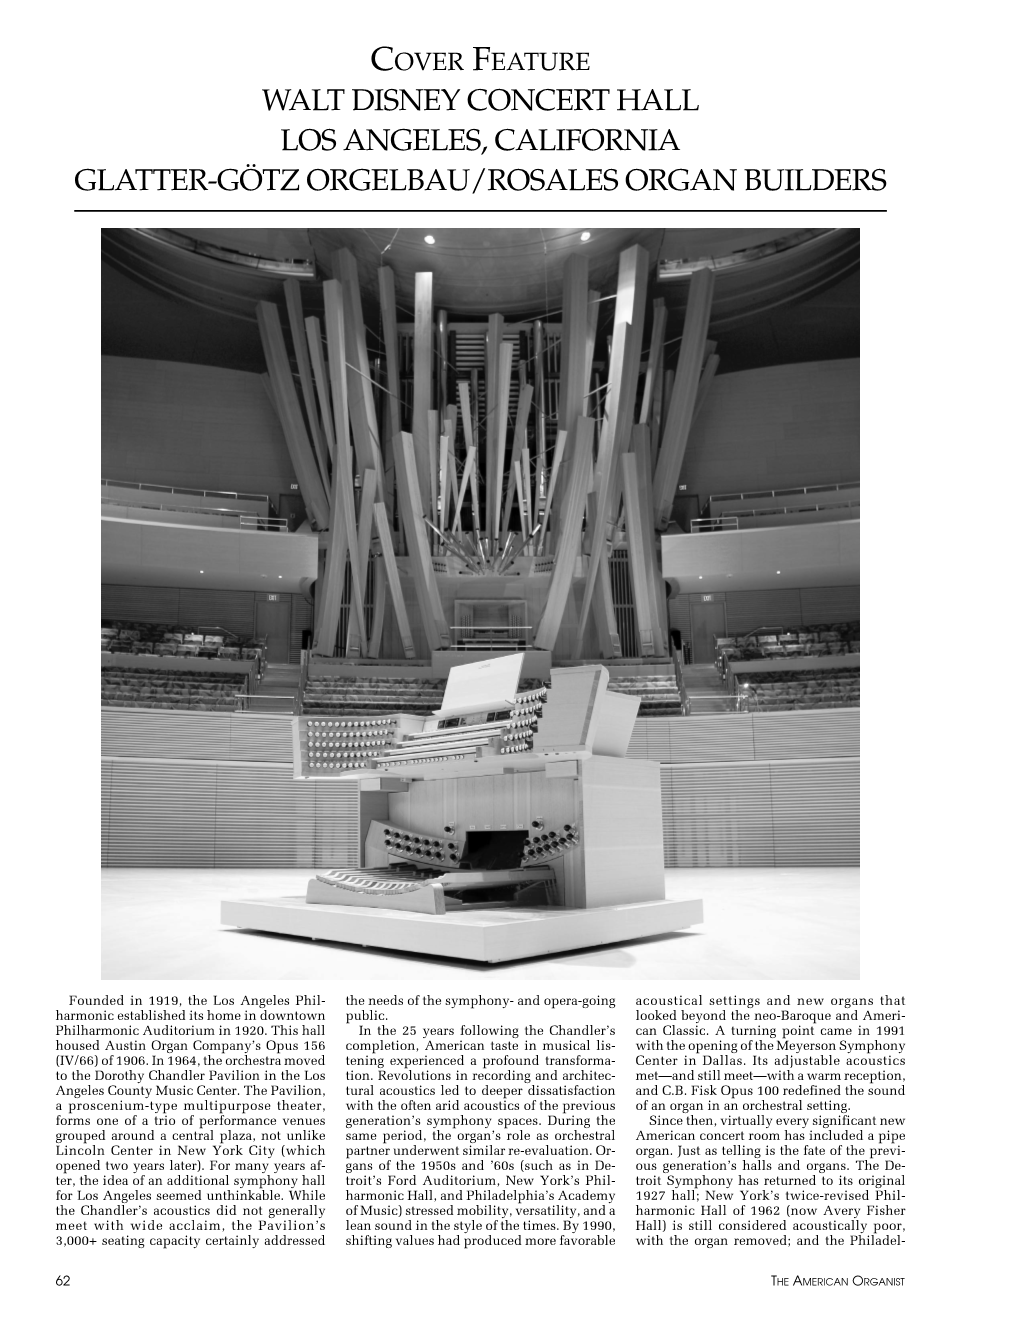 Walt Disney Concert Hall Los Angeles, California Glatter-Götz Orgelbau/Rosales Organ Builders